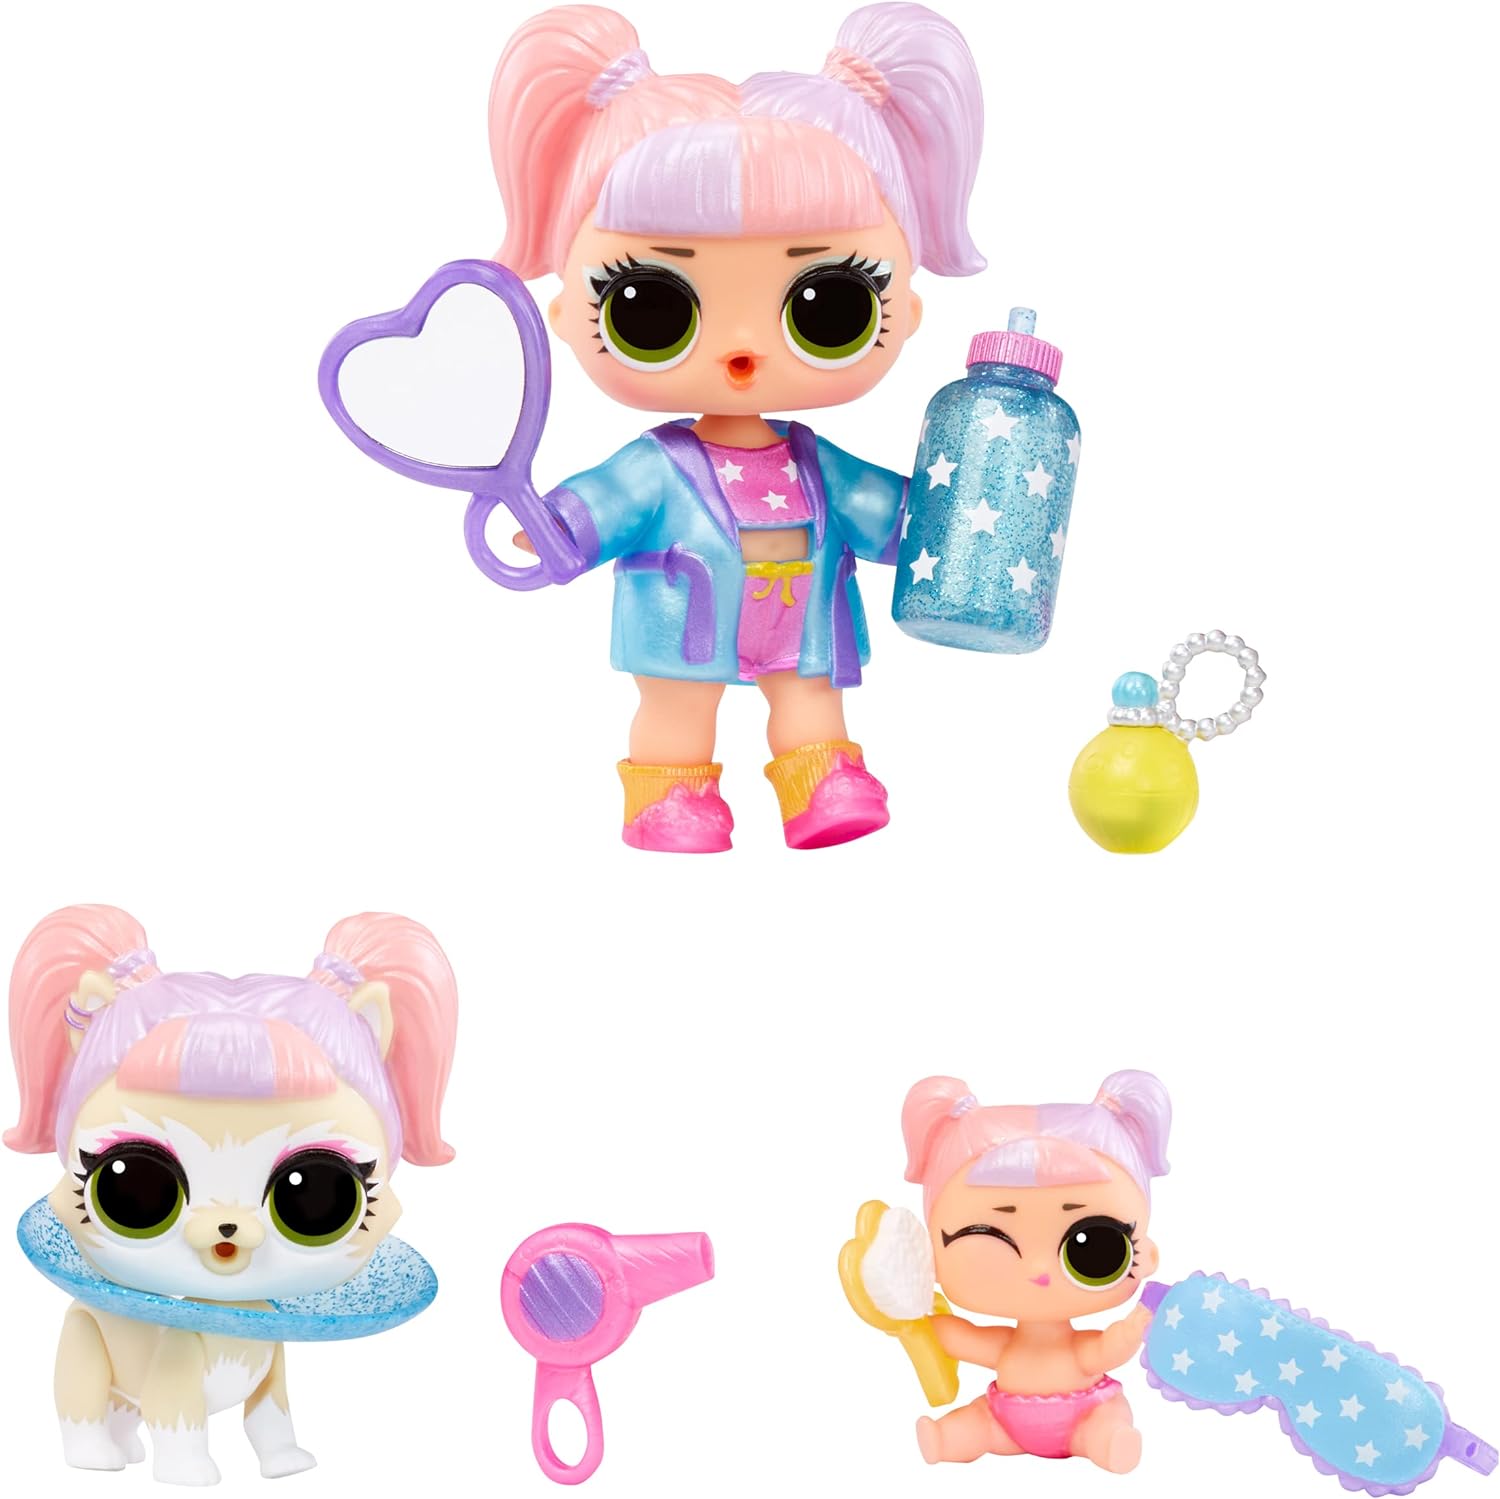 L.O.L. Surprise! Bubble Surprise Deluxe - Collectible Dolls, Pet, Baby Sister, Surprises, Accessories, Unboxing, Color-Change Foam Reaction - Great Gift for Girls Age 4+